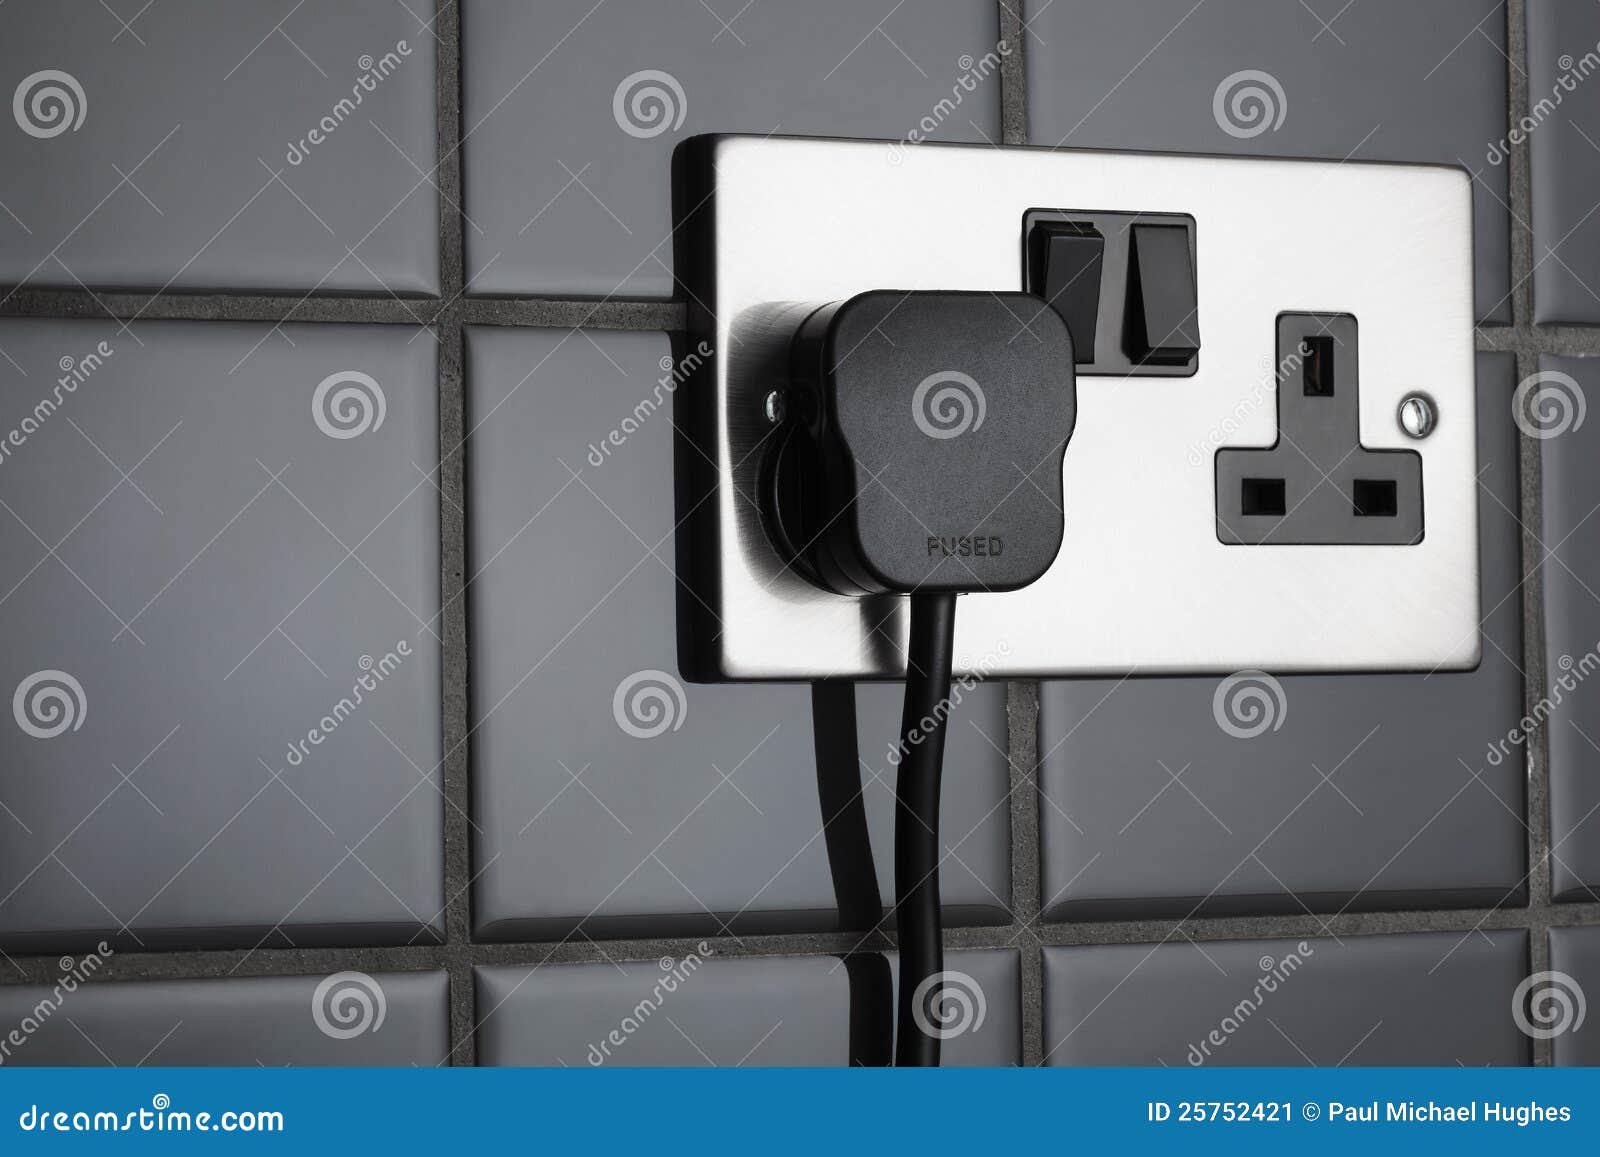 plug socket in kitchen